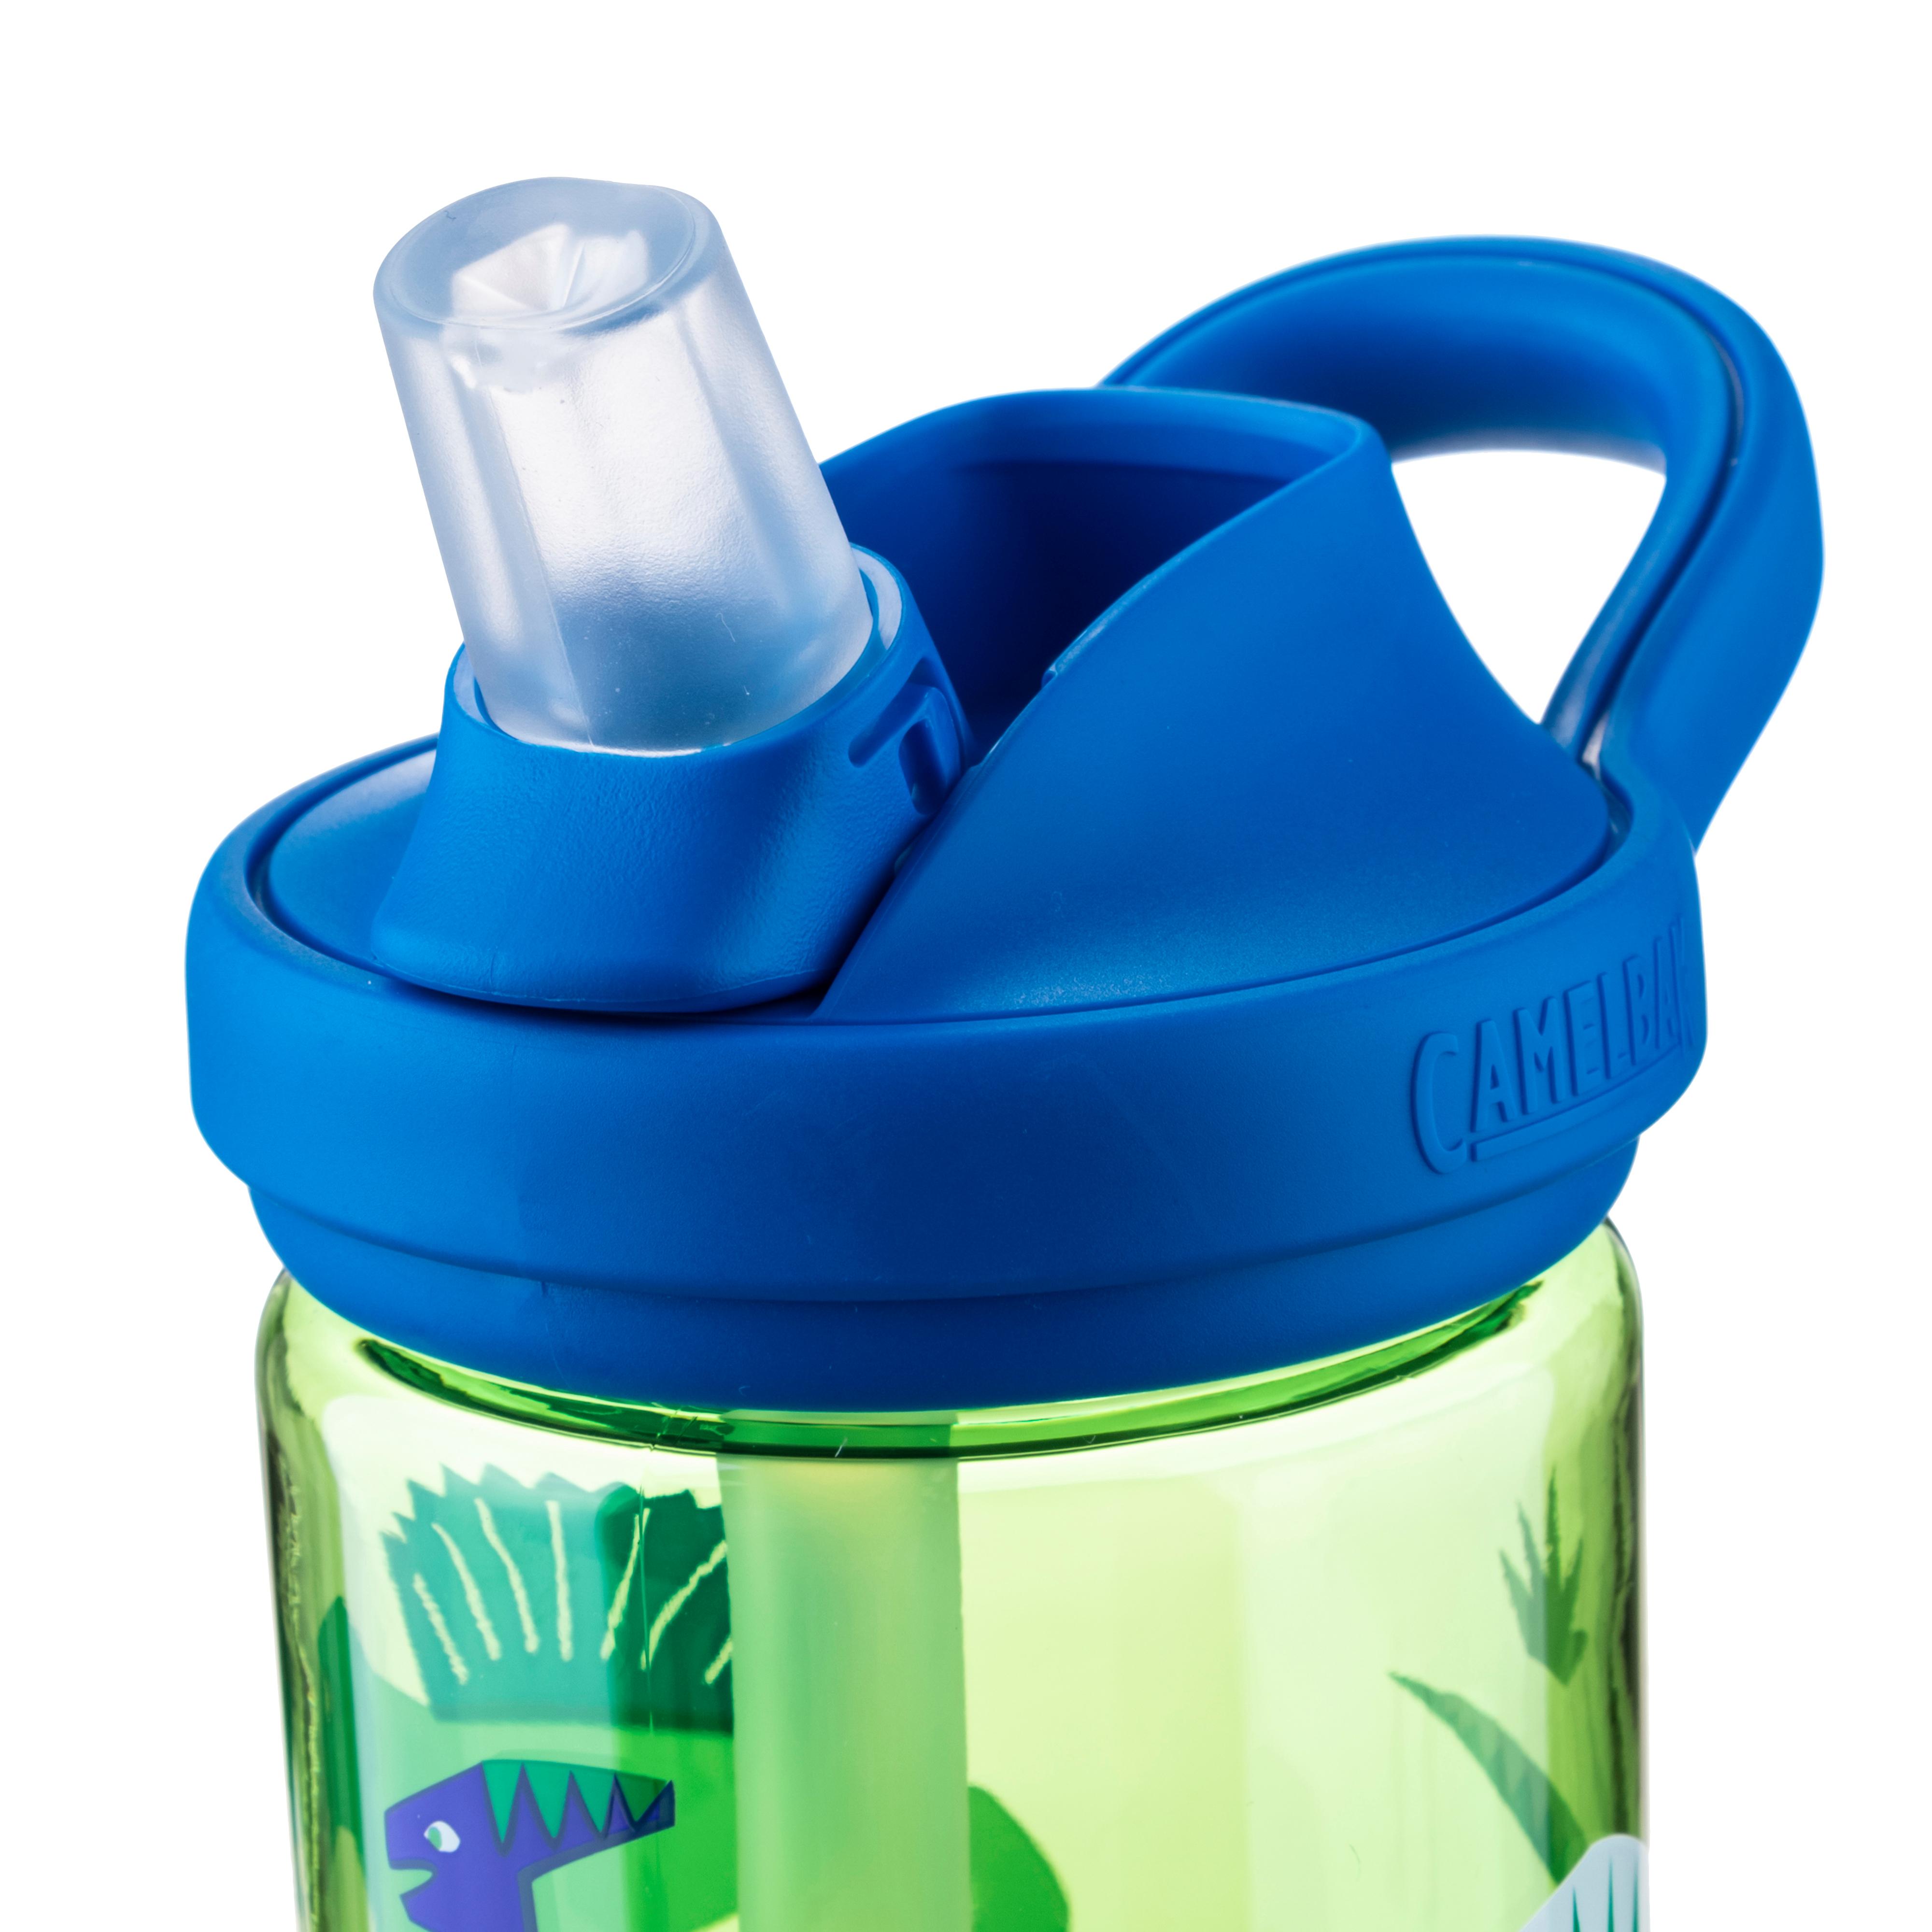 Kids Camelbak HIP DINOS Camelbak Water Bottle Daycare 